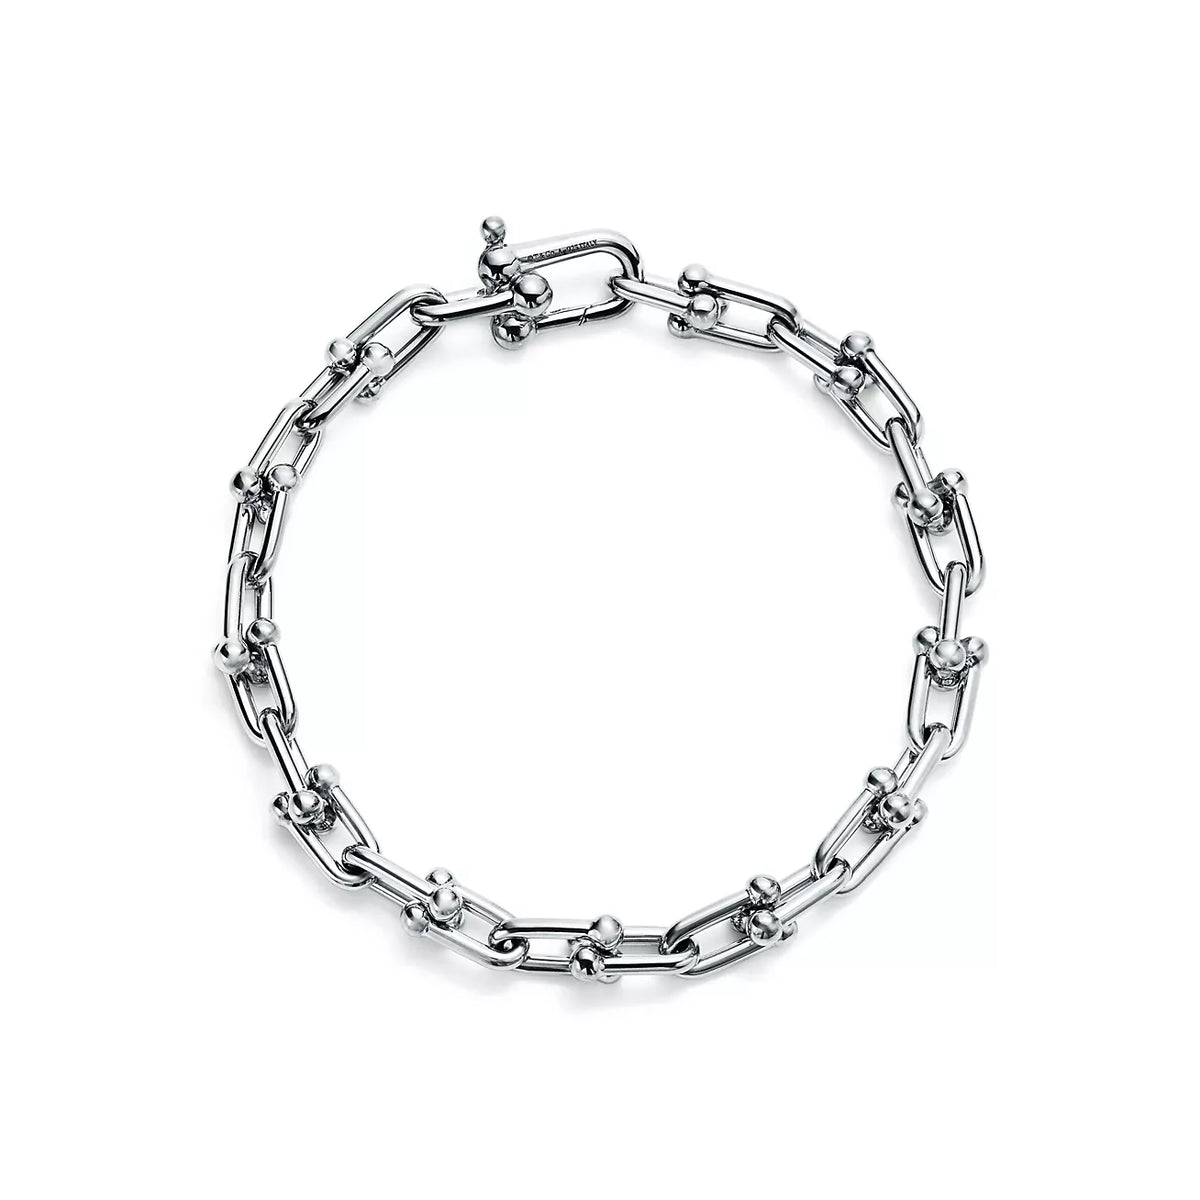 Small Link Bracelet in Sterling Silver